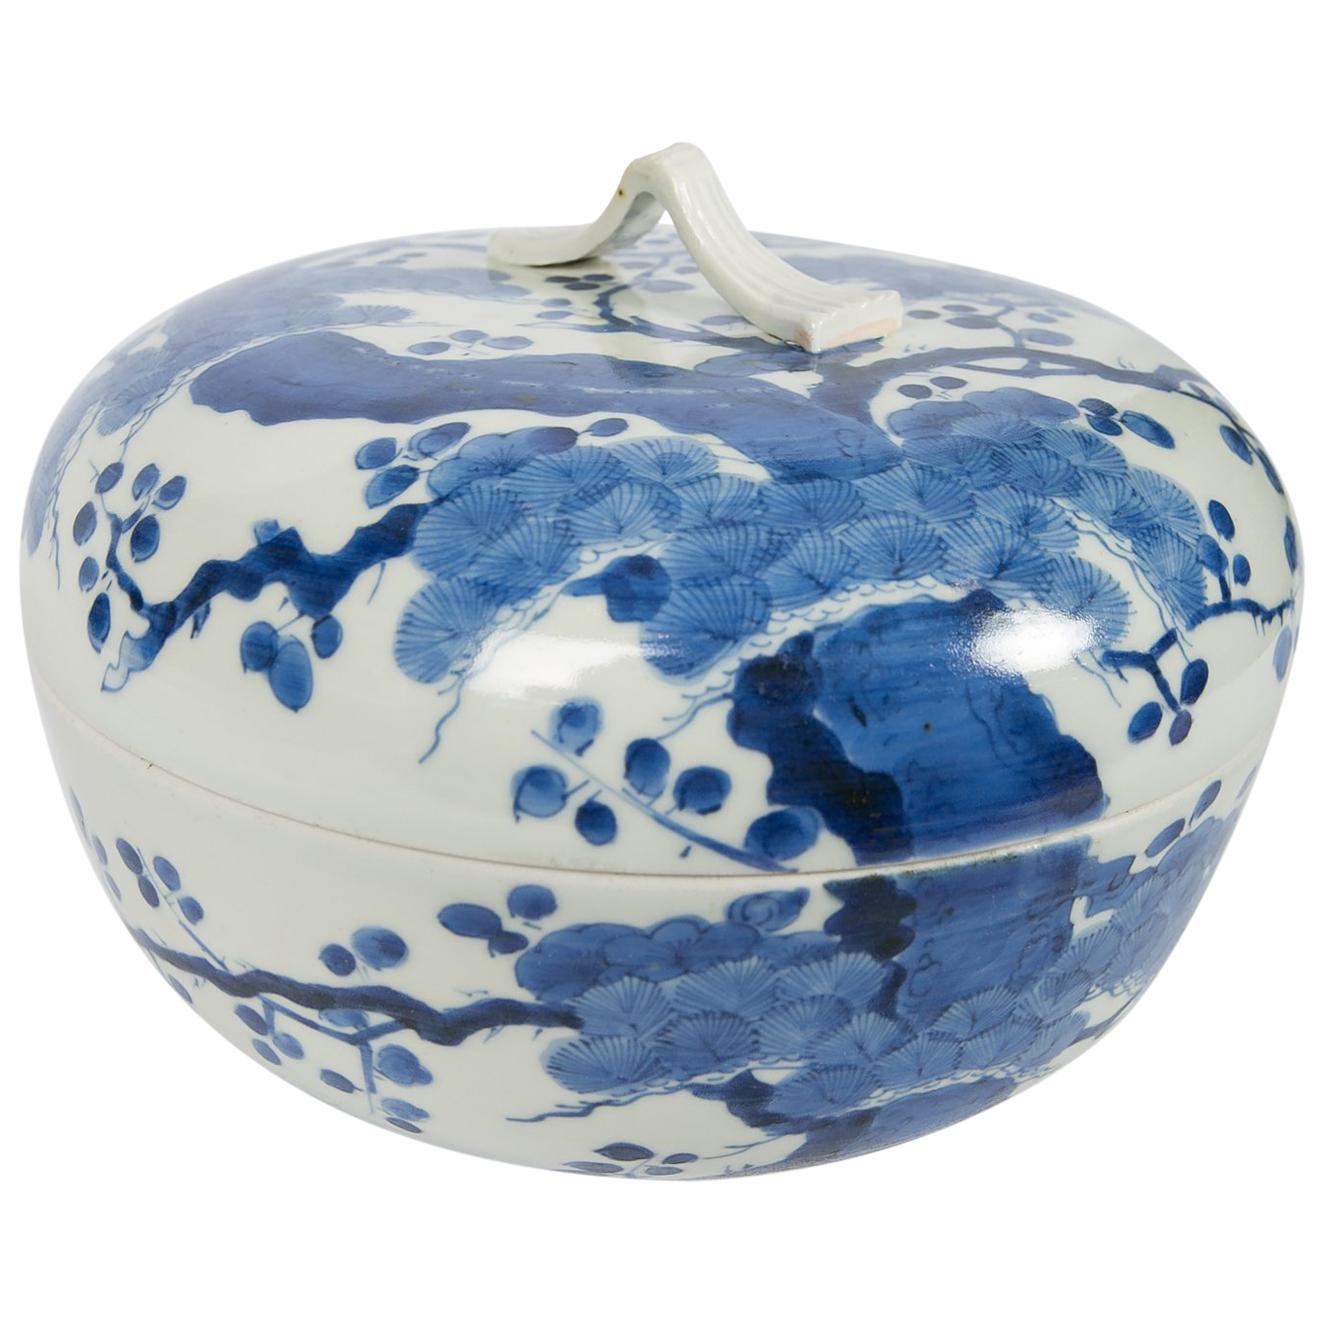 Antique Japanese Blue and White Porcelain Bowl circa 1760